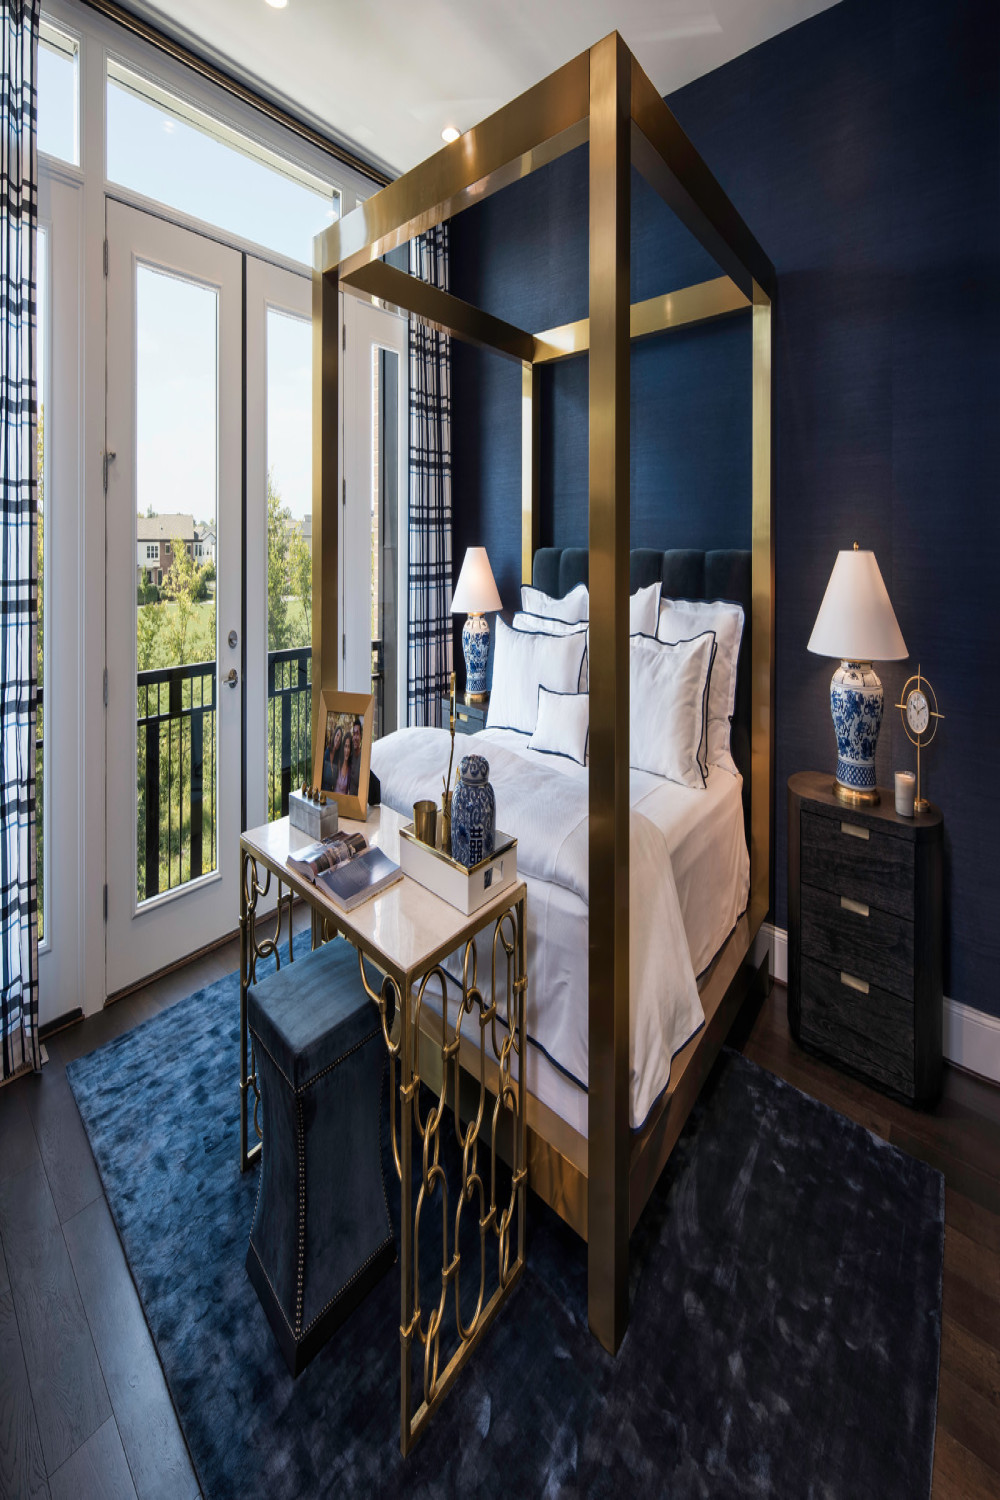 Royal Blue Bedroom Ideas to Evoke an Impressive Yet Serene